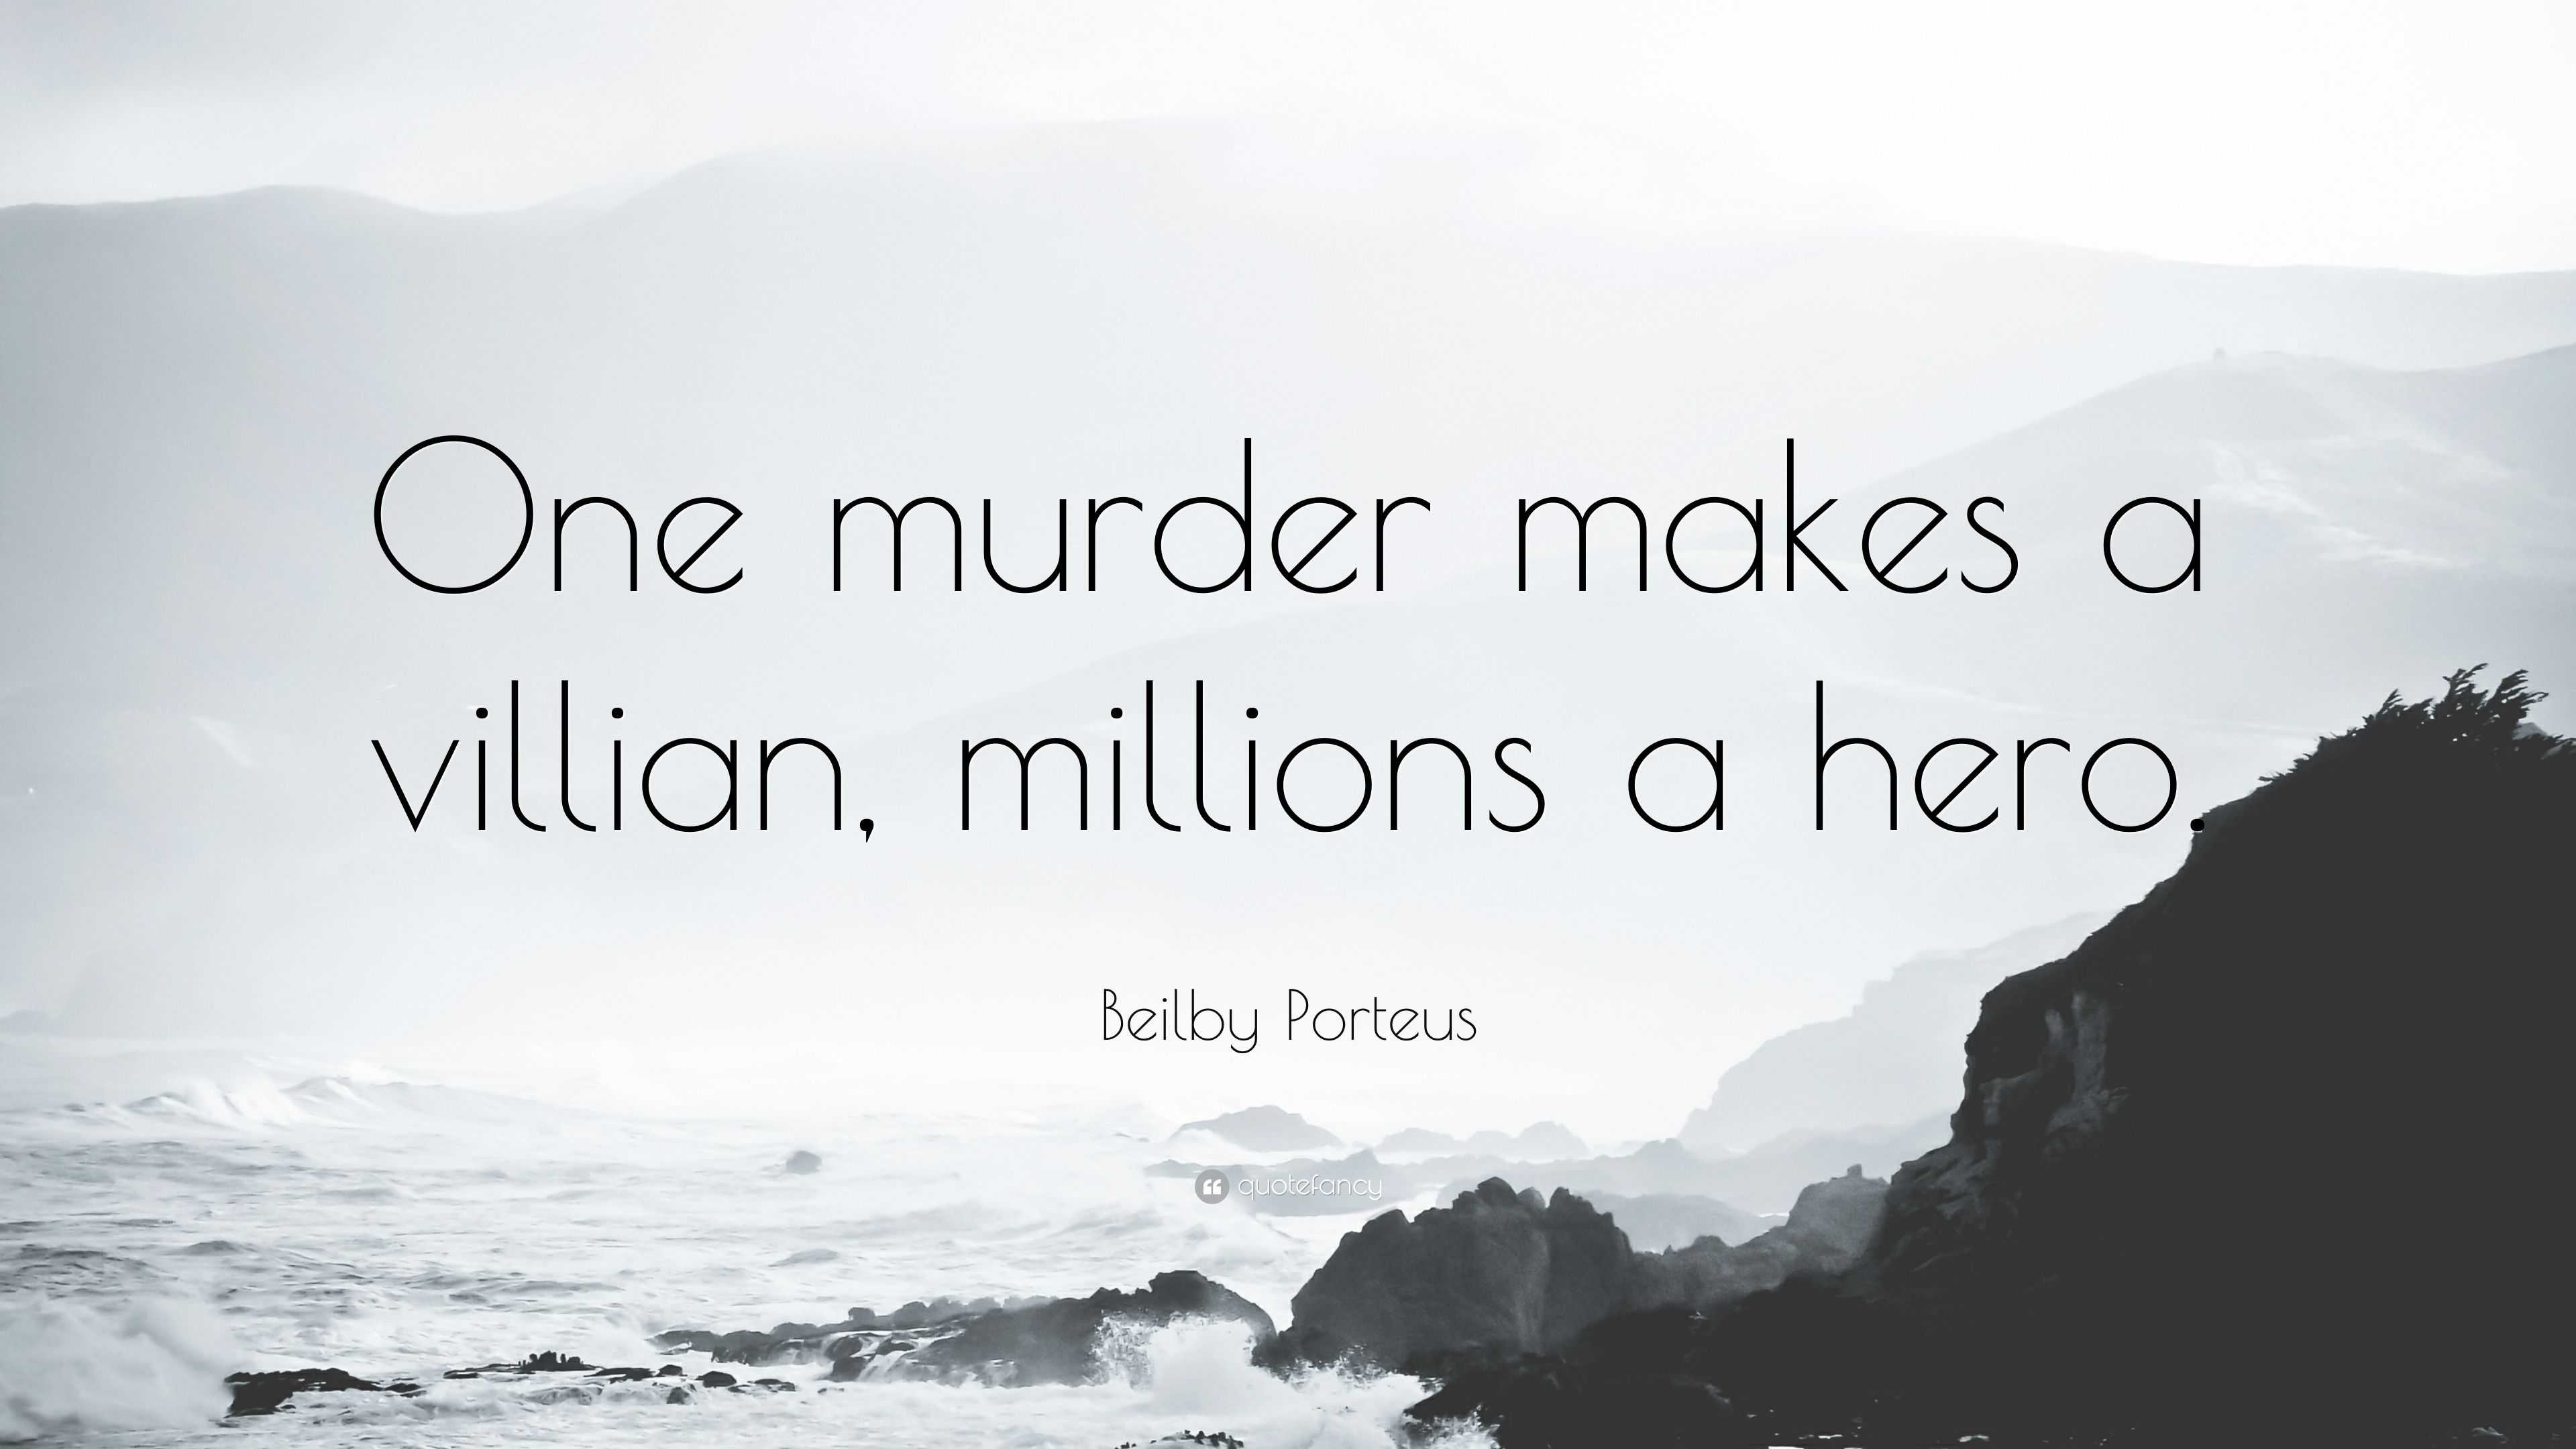 Beilby Porteus Quote: “One murder makes a villian, millions a hero.”